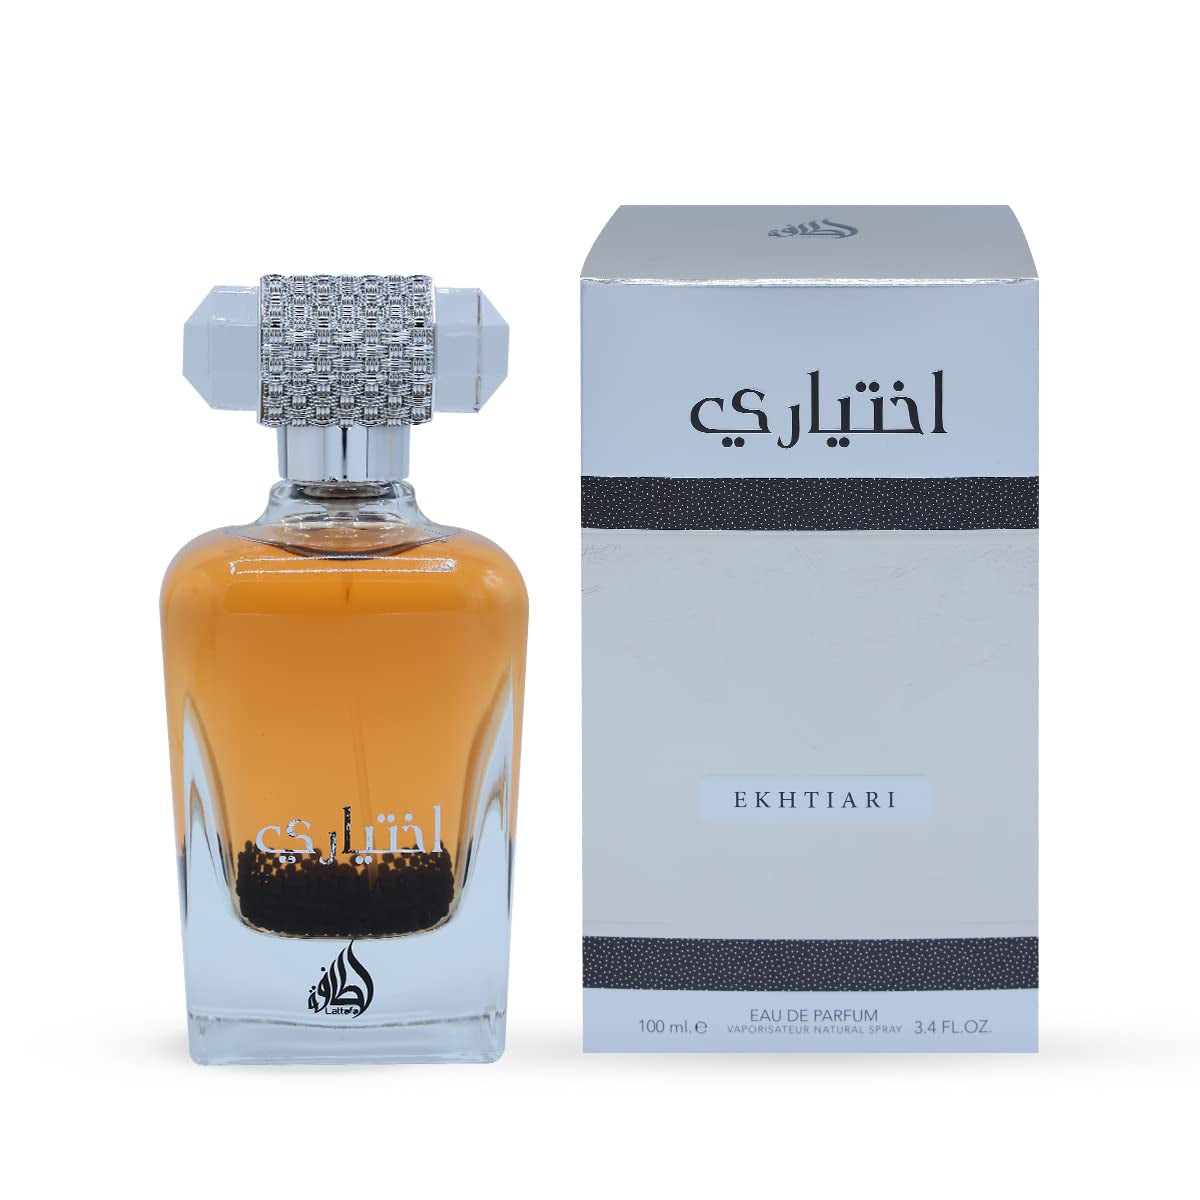 Ekhtiari Edp Perfumes for Women